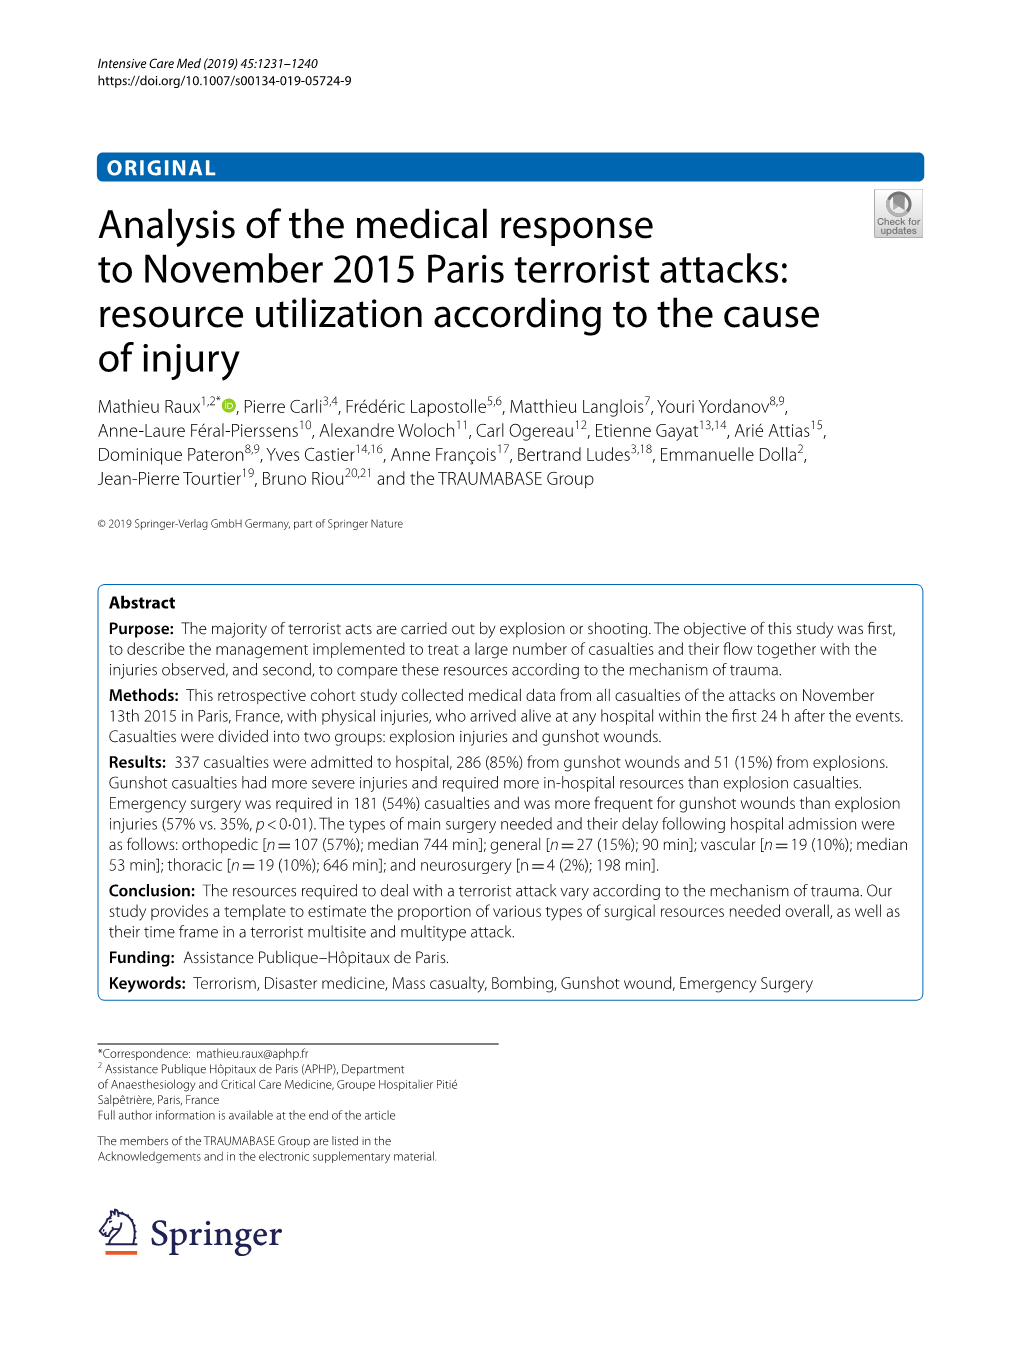 Analysis of the Medical Response to November 2015 Paris Terrorist Attacks: Resource Utilization According to the Cause of Injury